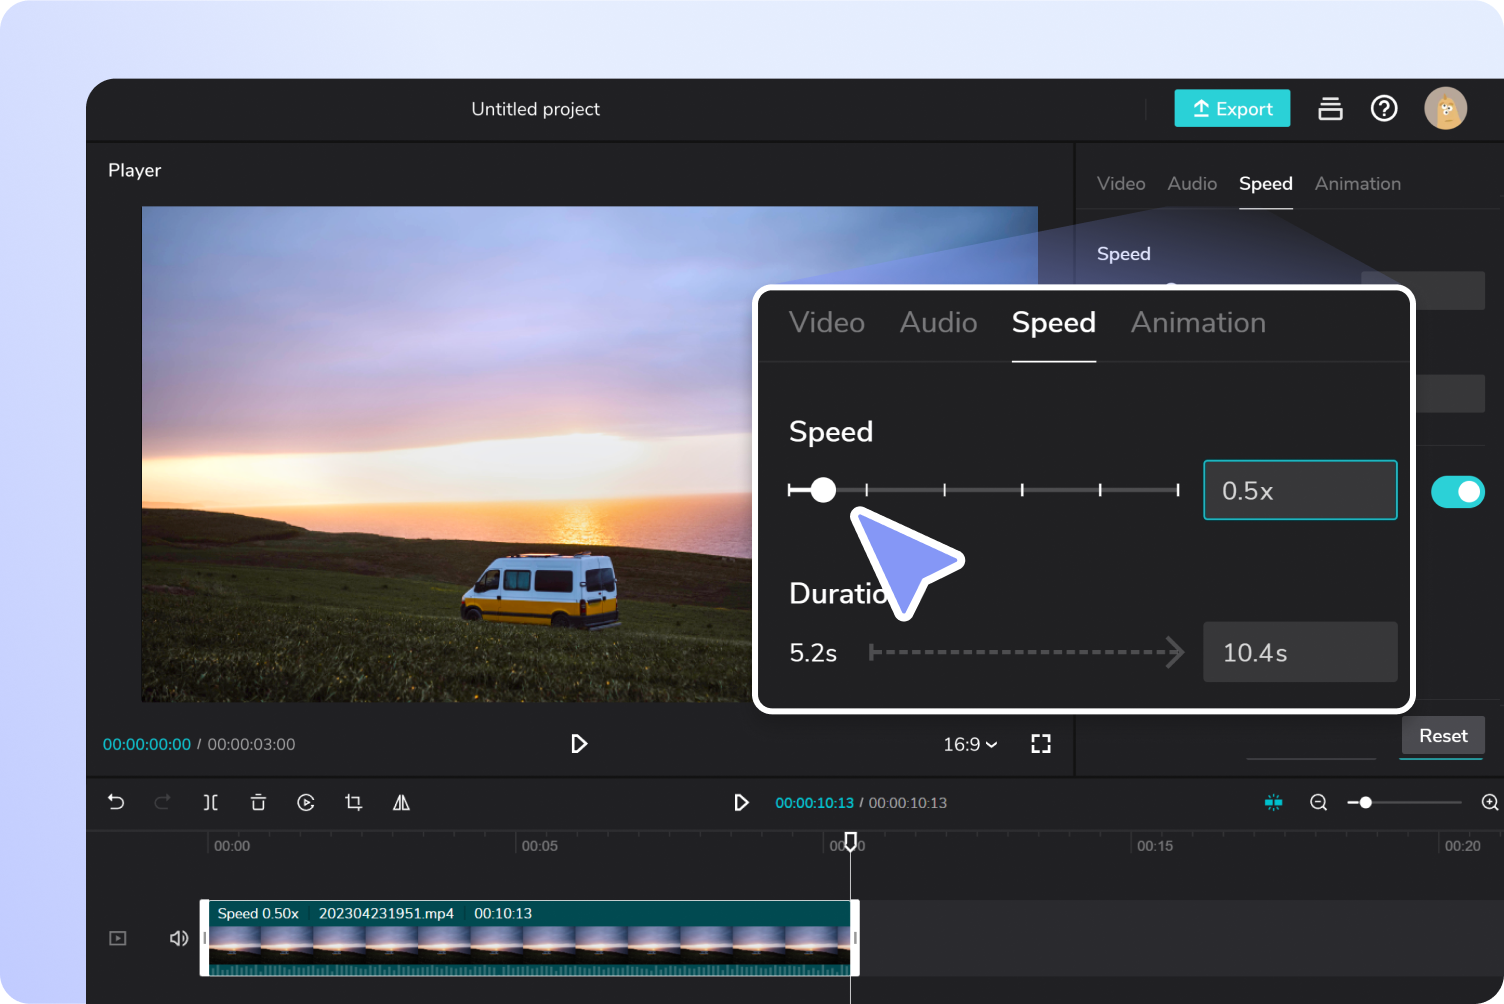 Change video speed via the slider